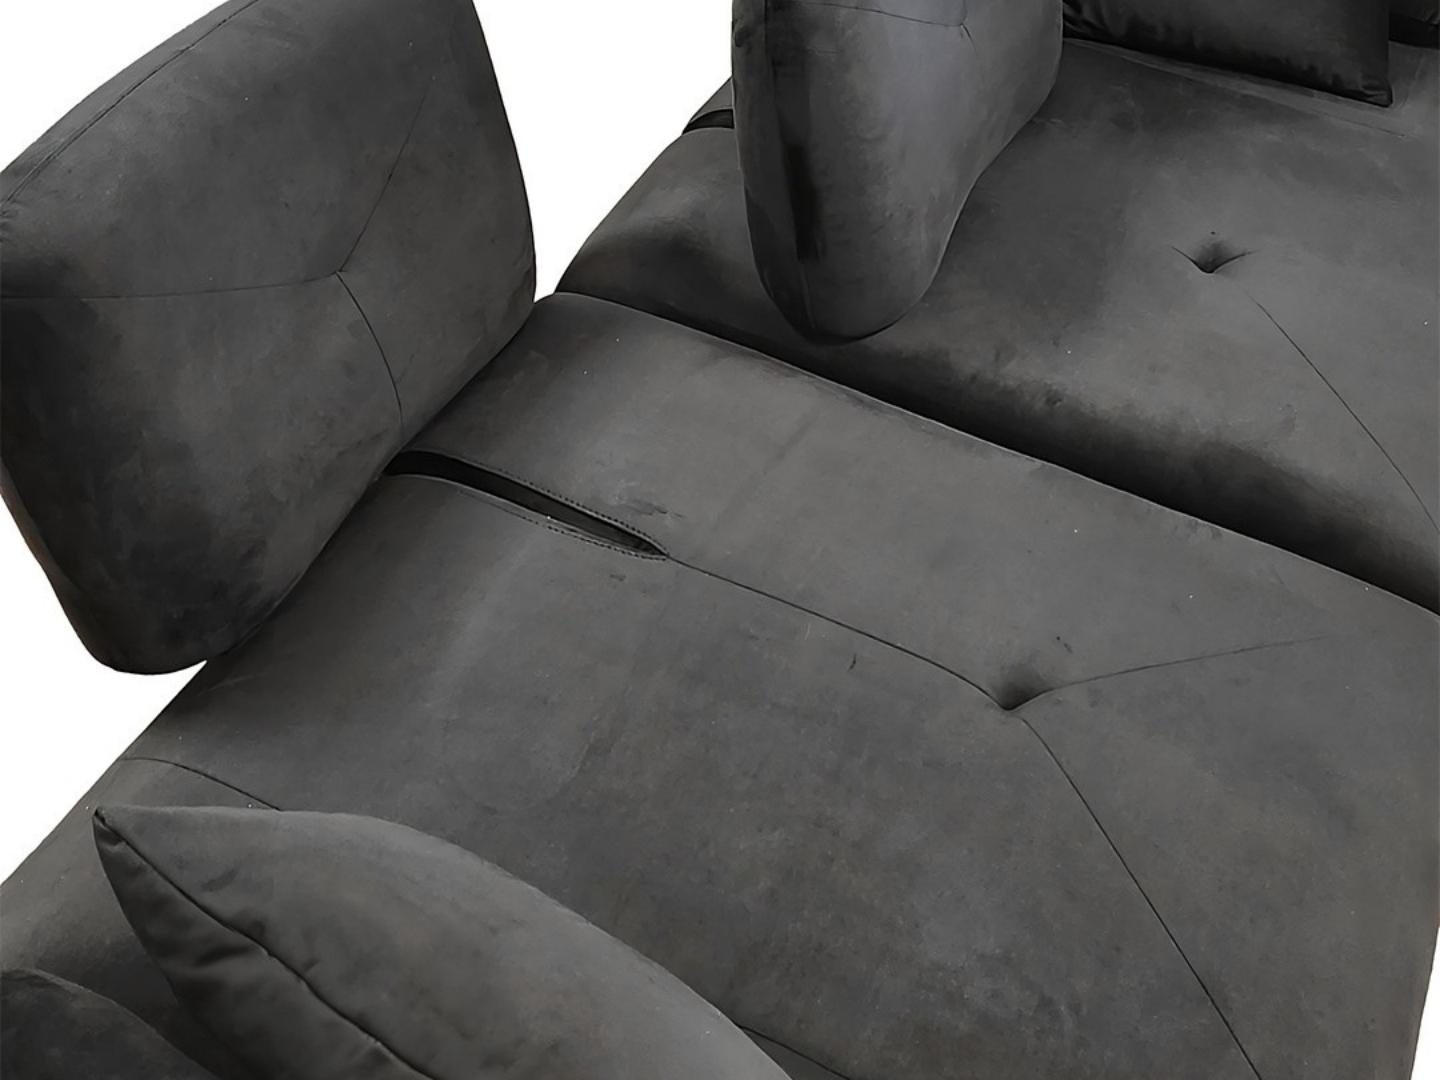 black 3 seater sofa bed - Lux Furniture